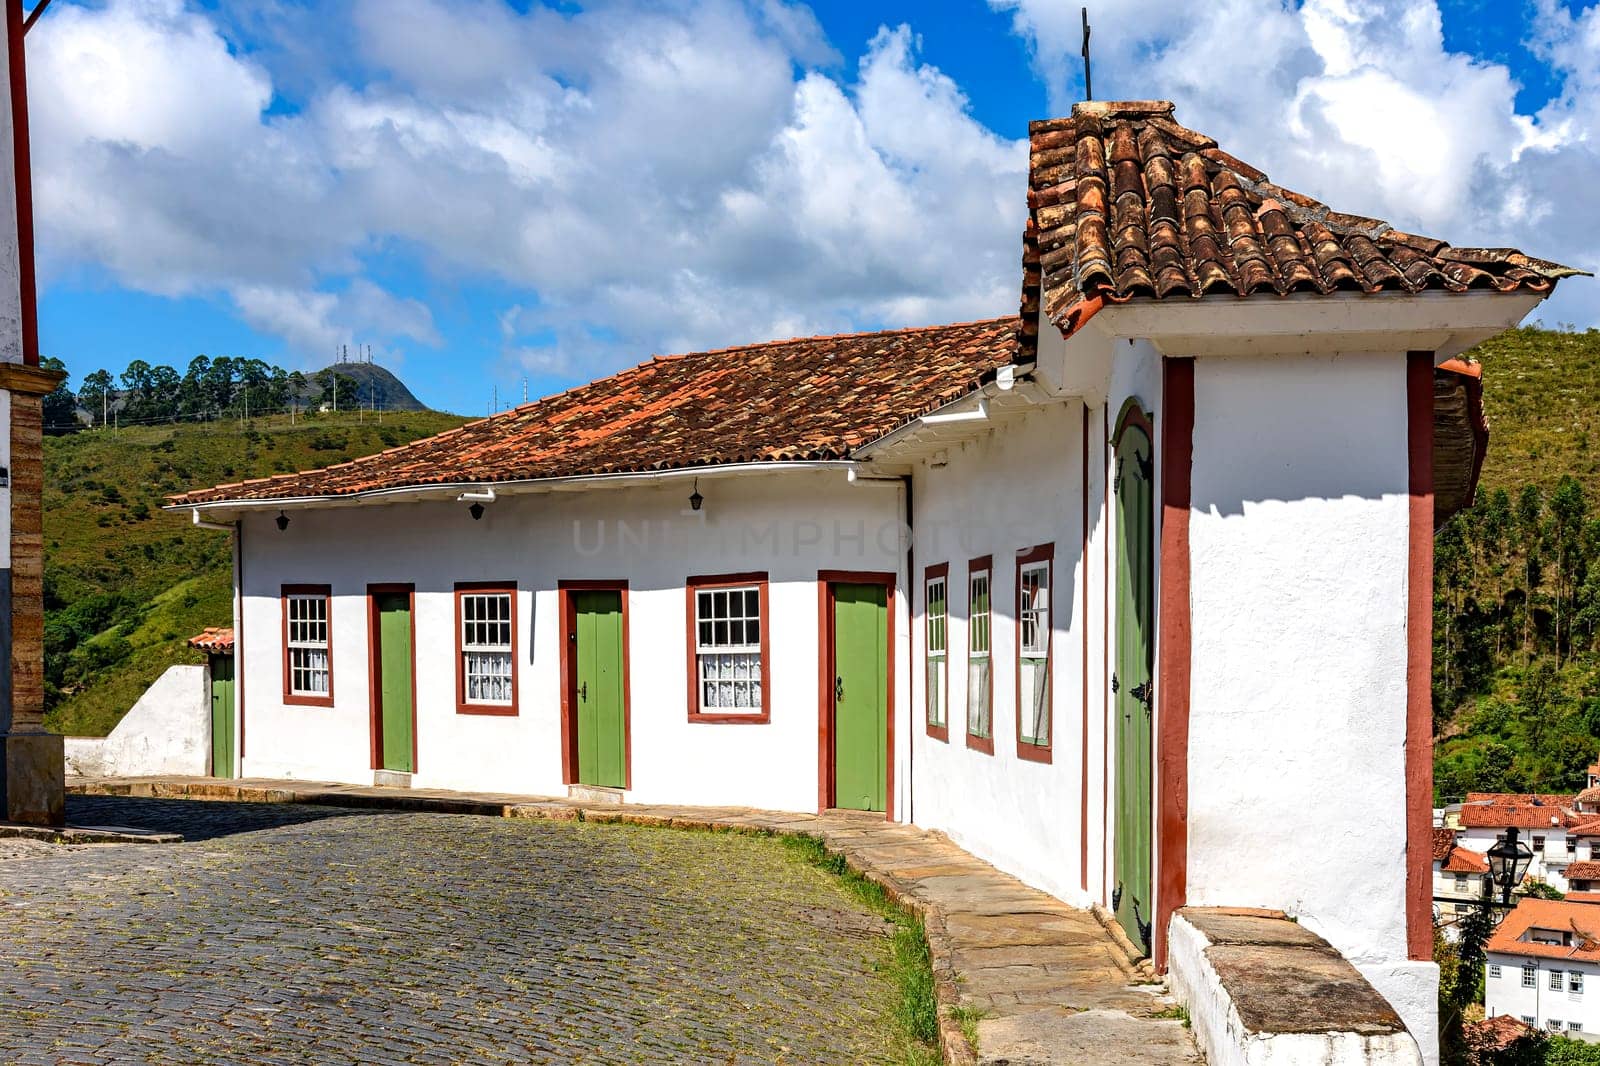 Cobblestone streets of Ouro Preto by Fred_Pinheiro